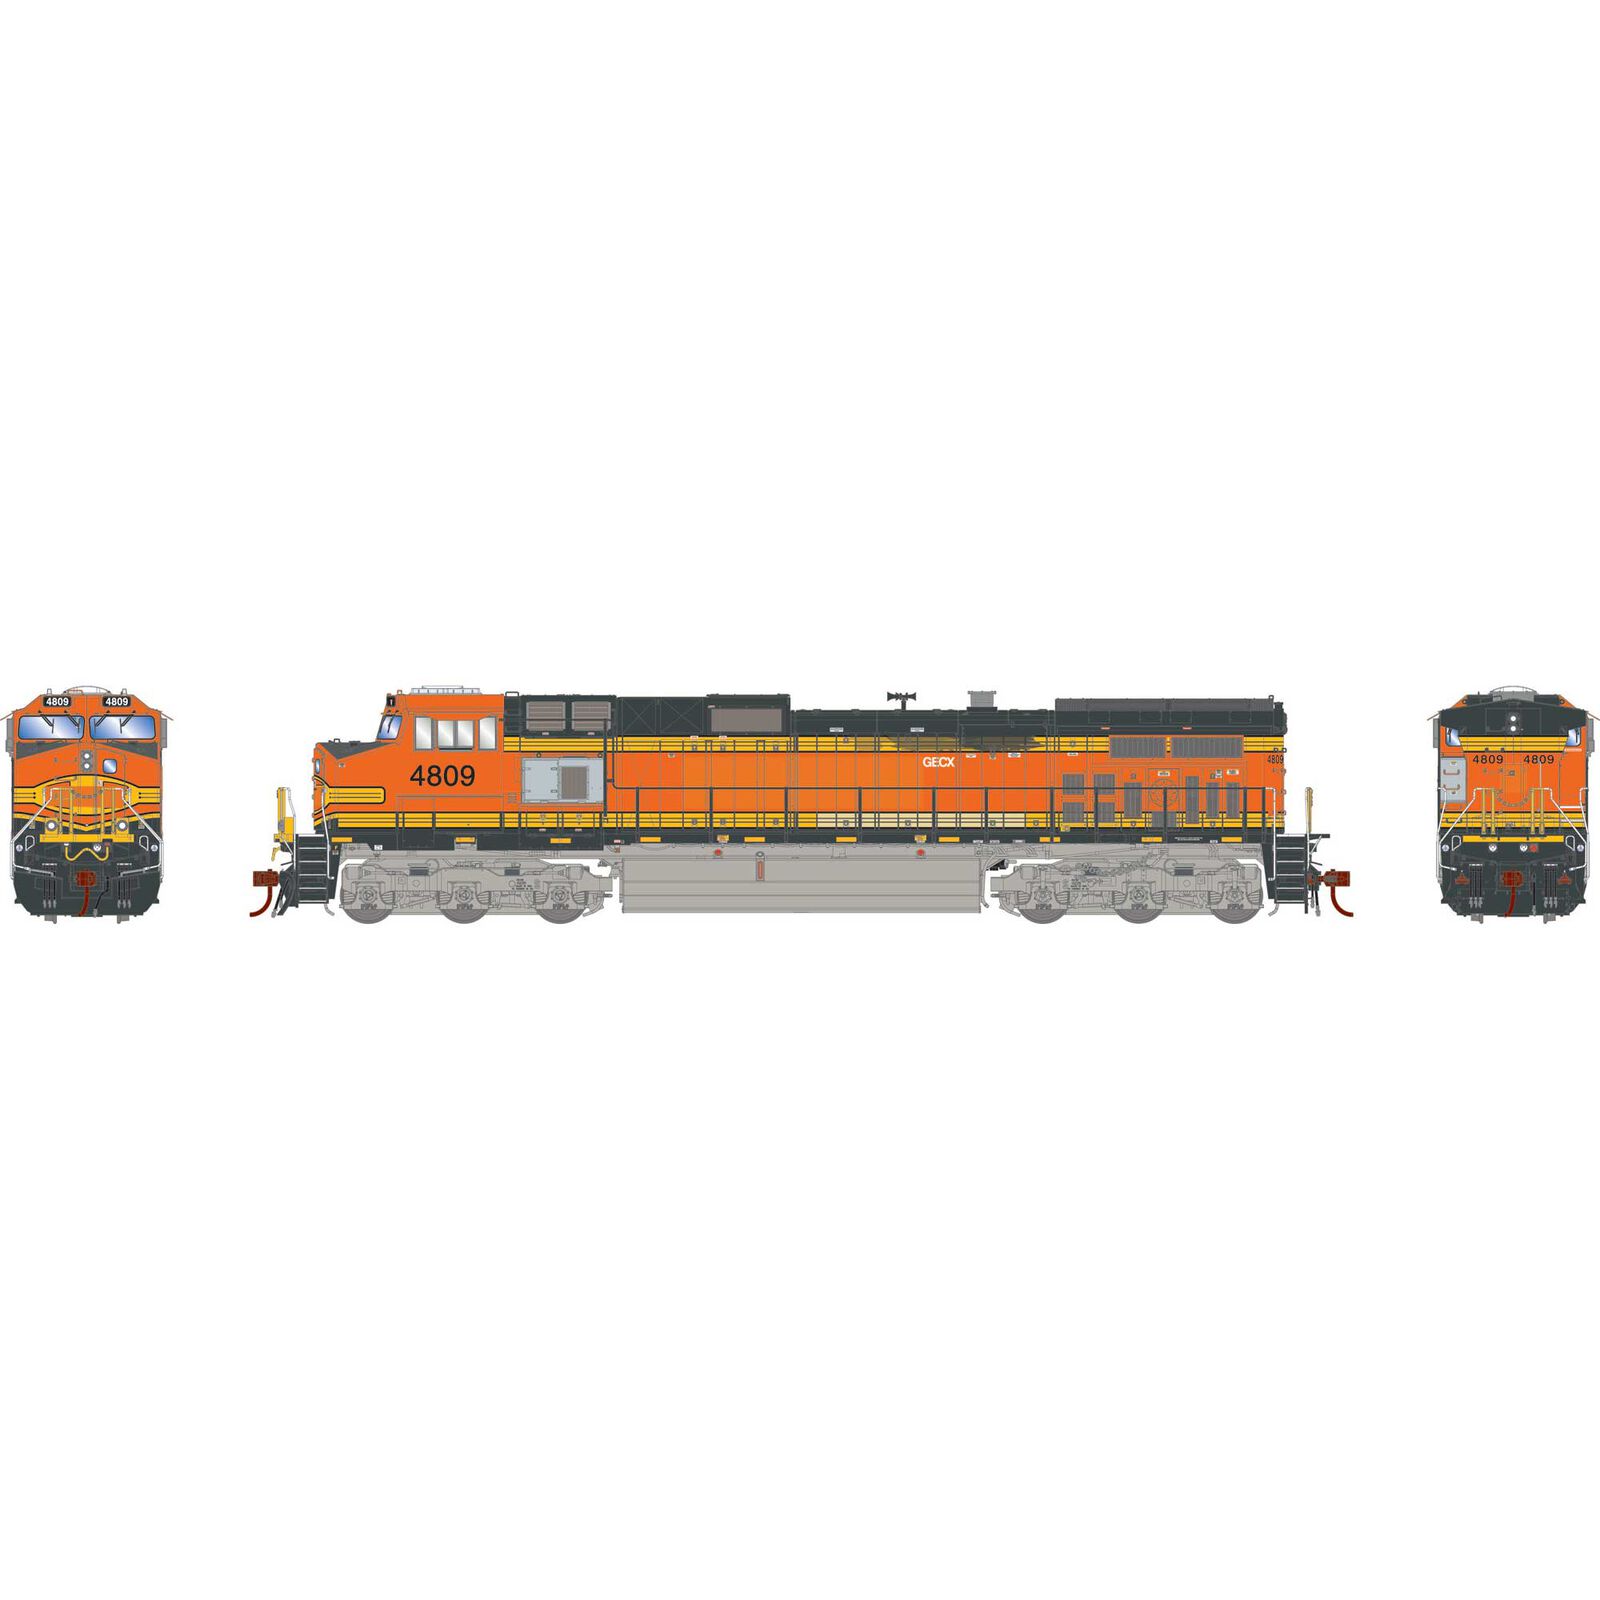 HO Dash 9-44CW Locomotive with DCC & Sound, GECX #4809